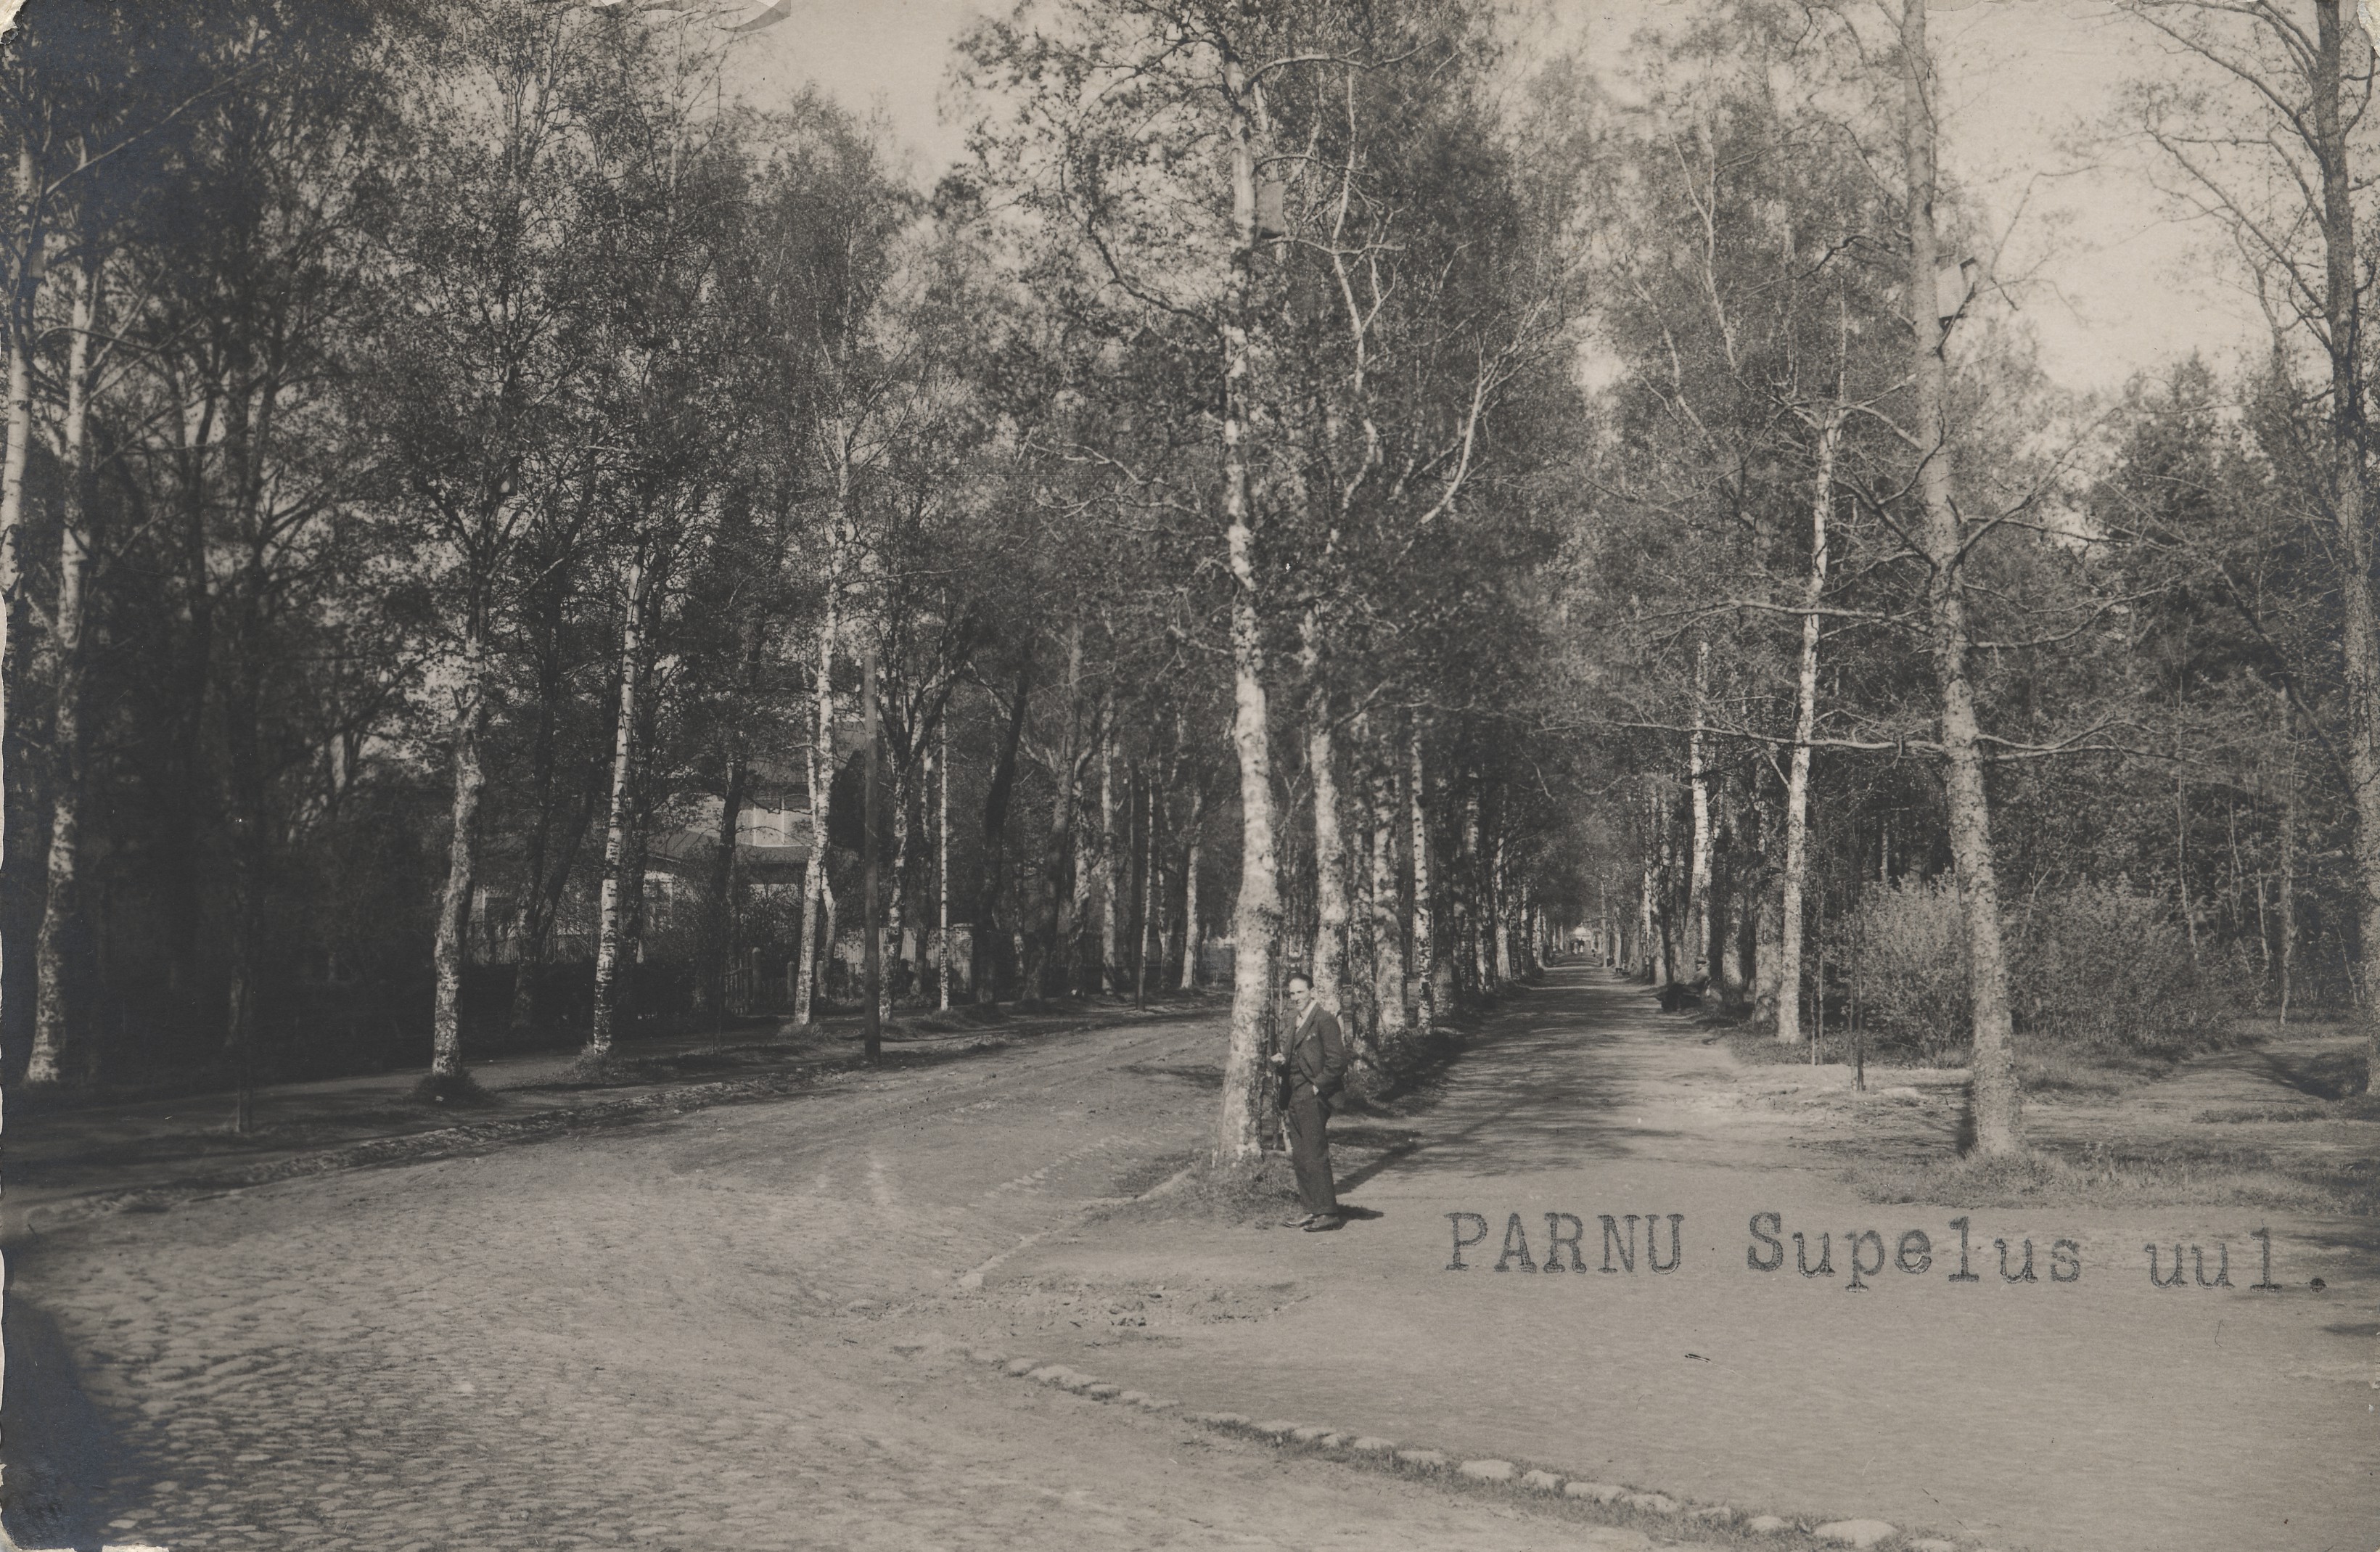 Pärnu Suplaus on the oul